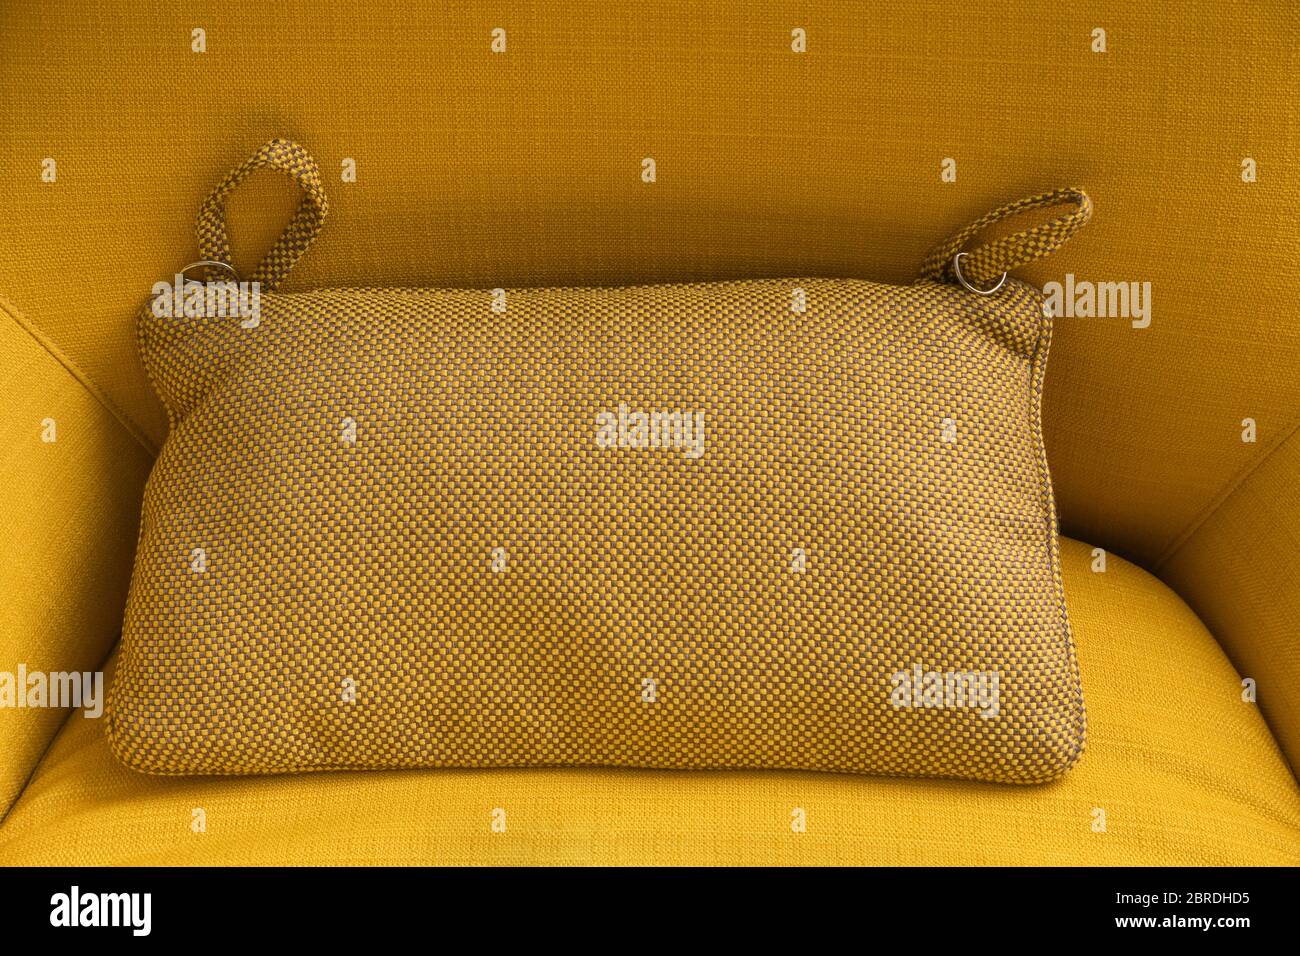 Decorative pillow on yellow textile sofa background. Home. Stock Photo